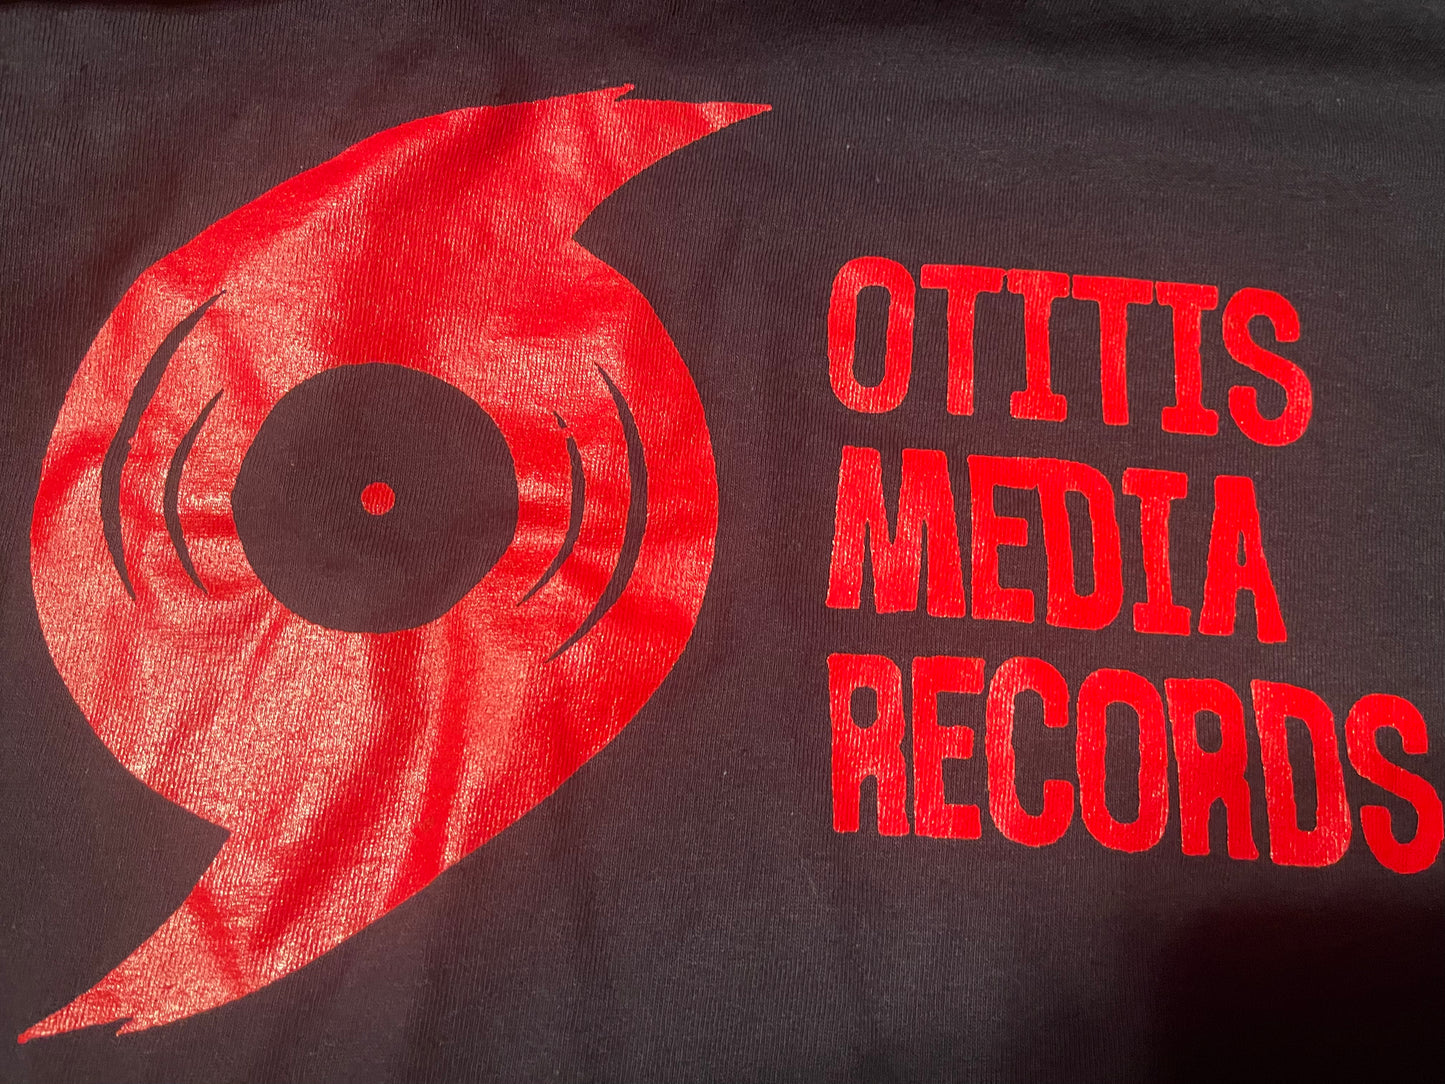 OMRMCH 003 Otitis Media Records Hurricane Logo T-Shirt